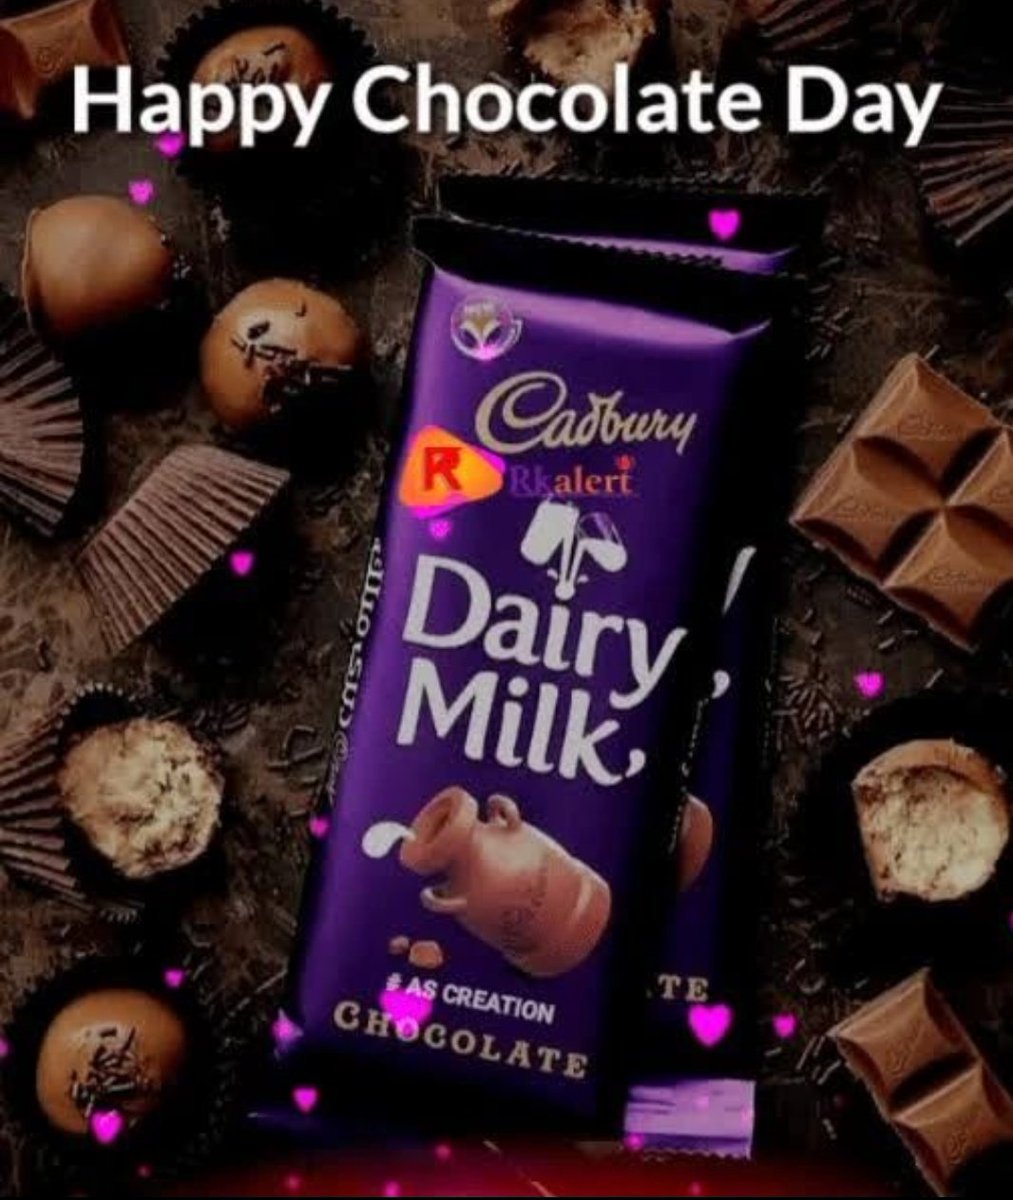 This is for my #crush ♥️
#happychocolateday 🍫🍫